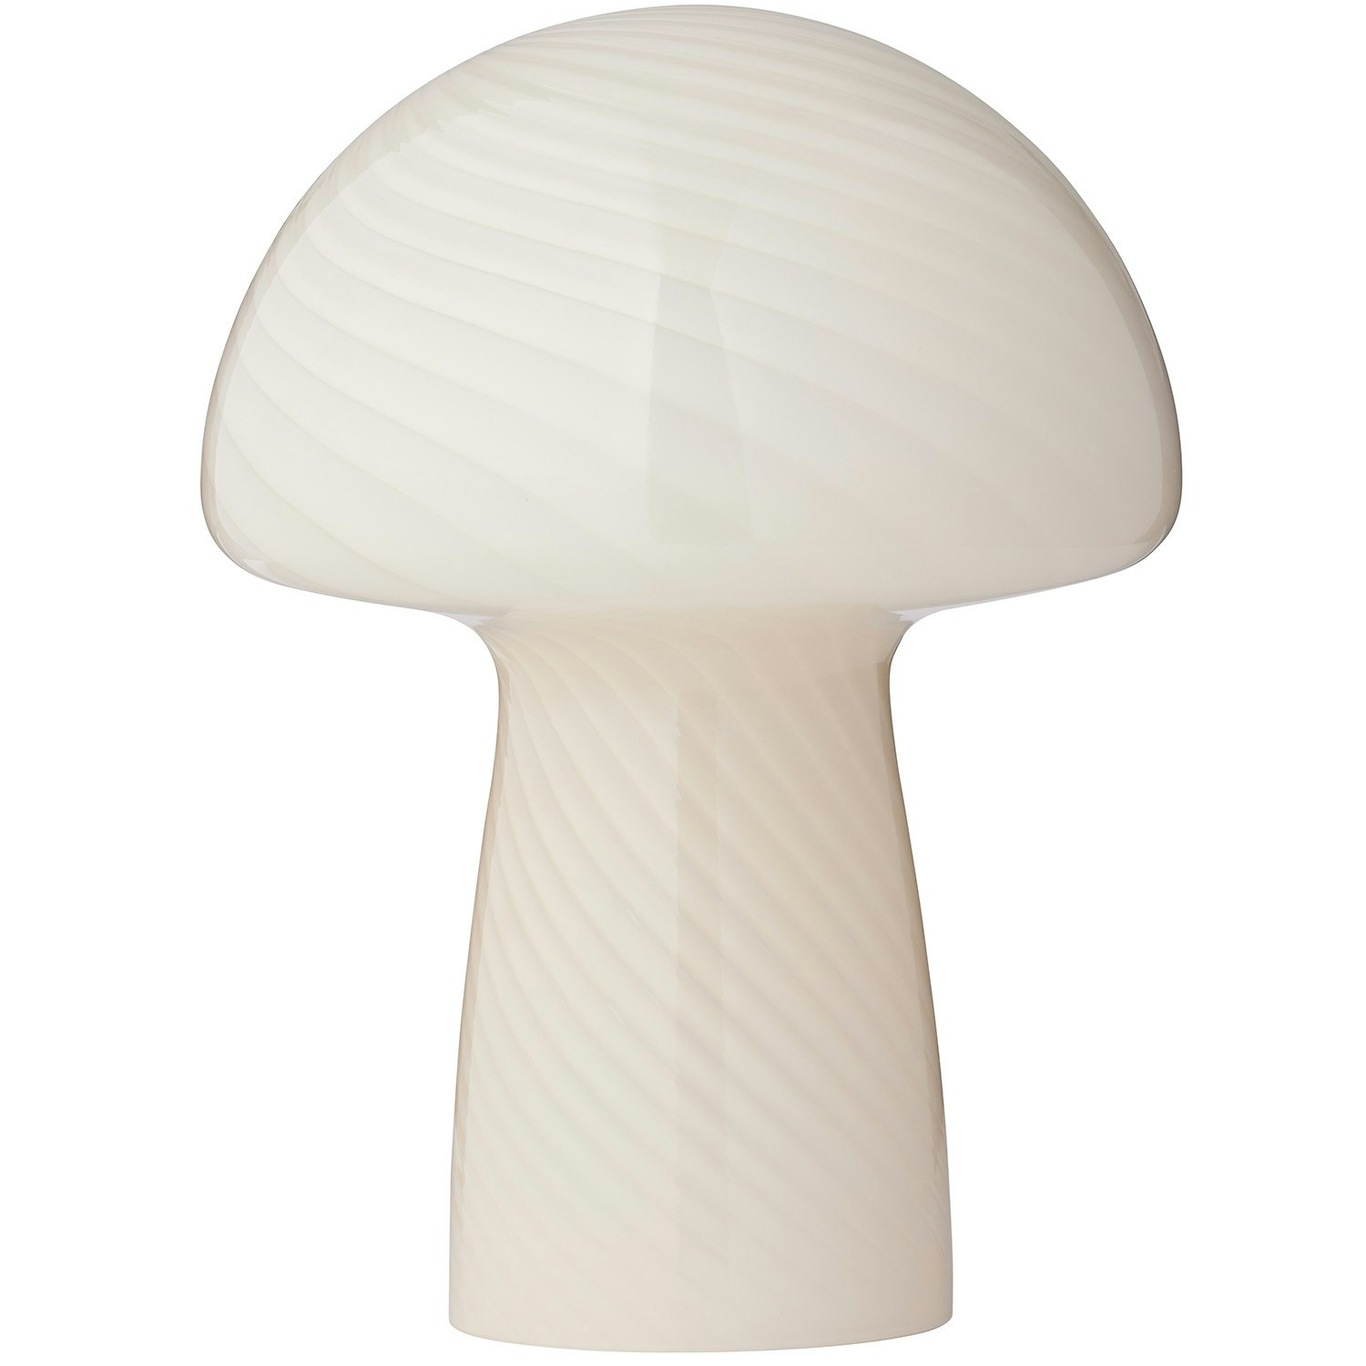 Mushroom Pöytävalaisin XL 32 cm, Keltainen